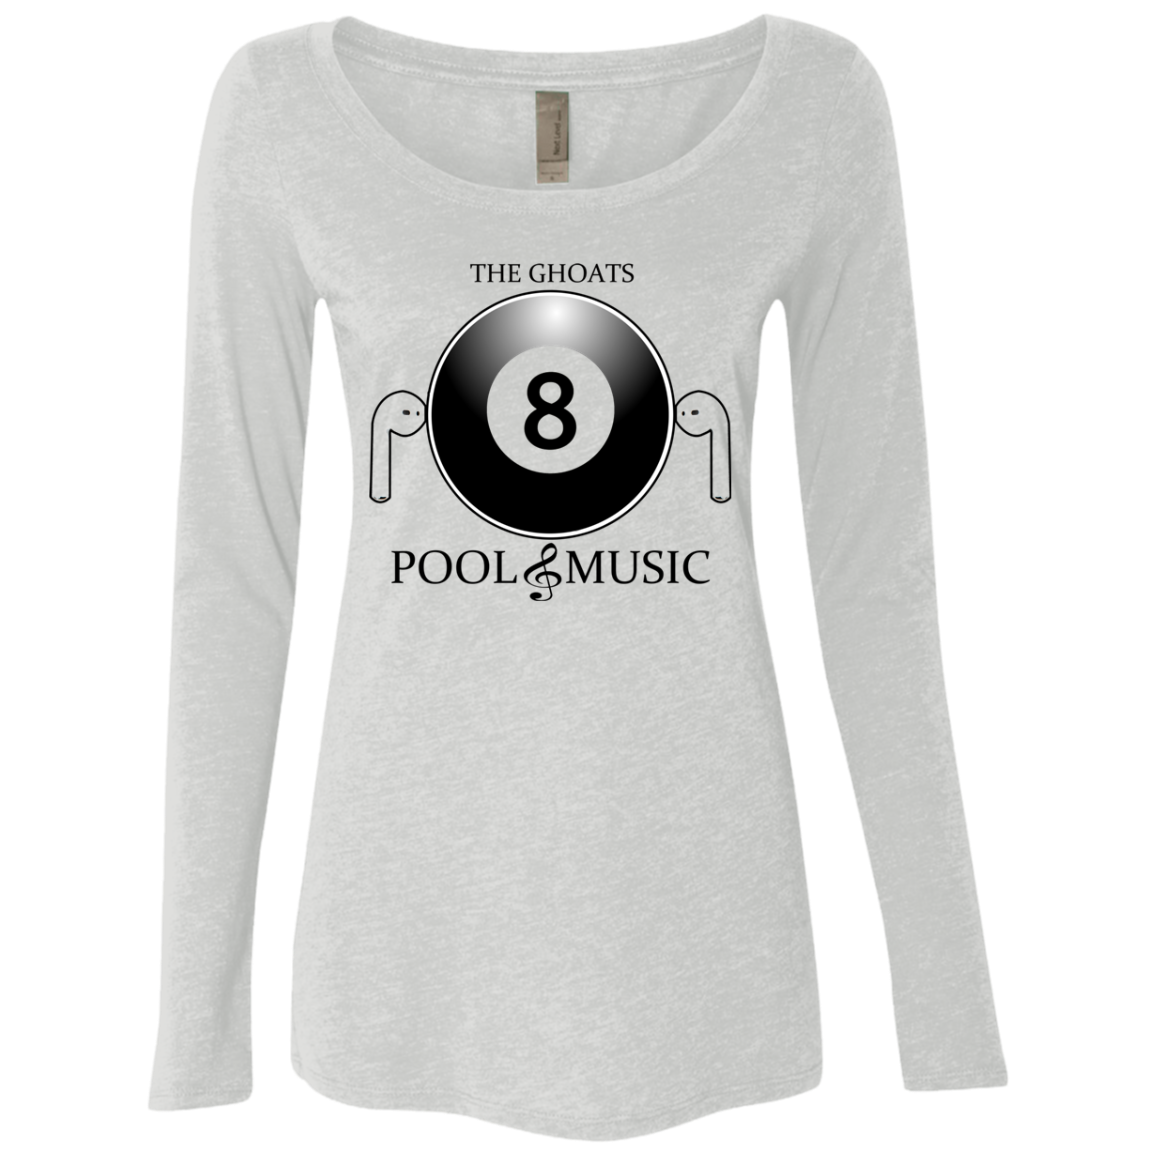 The GHOATS Custom Design. #19 Pool & Music. Ladies' Triblend LS Scoop